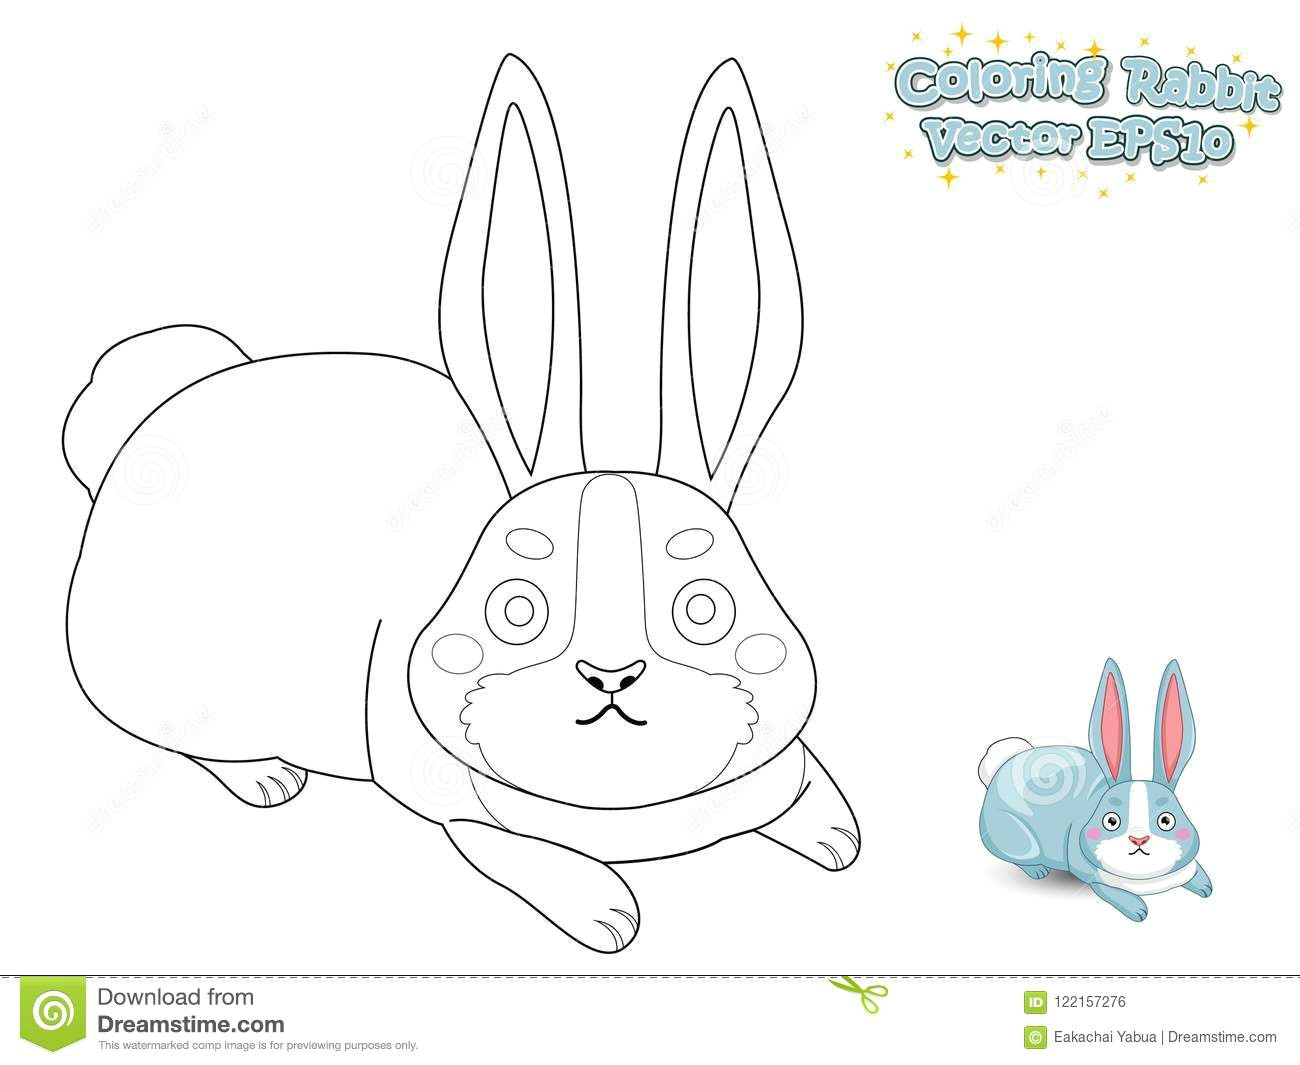 Drawing A Cartoon Rabbit Coloring the Cute Cartoon Rabbit Educational Game for Kids Vector